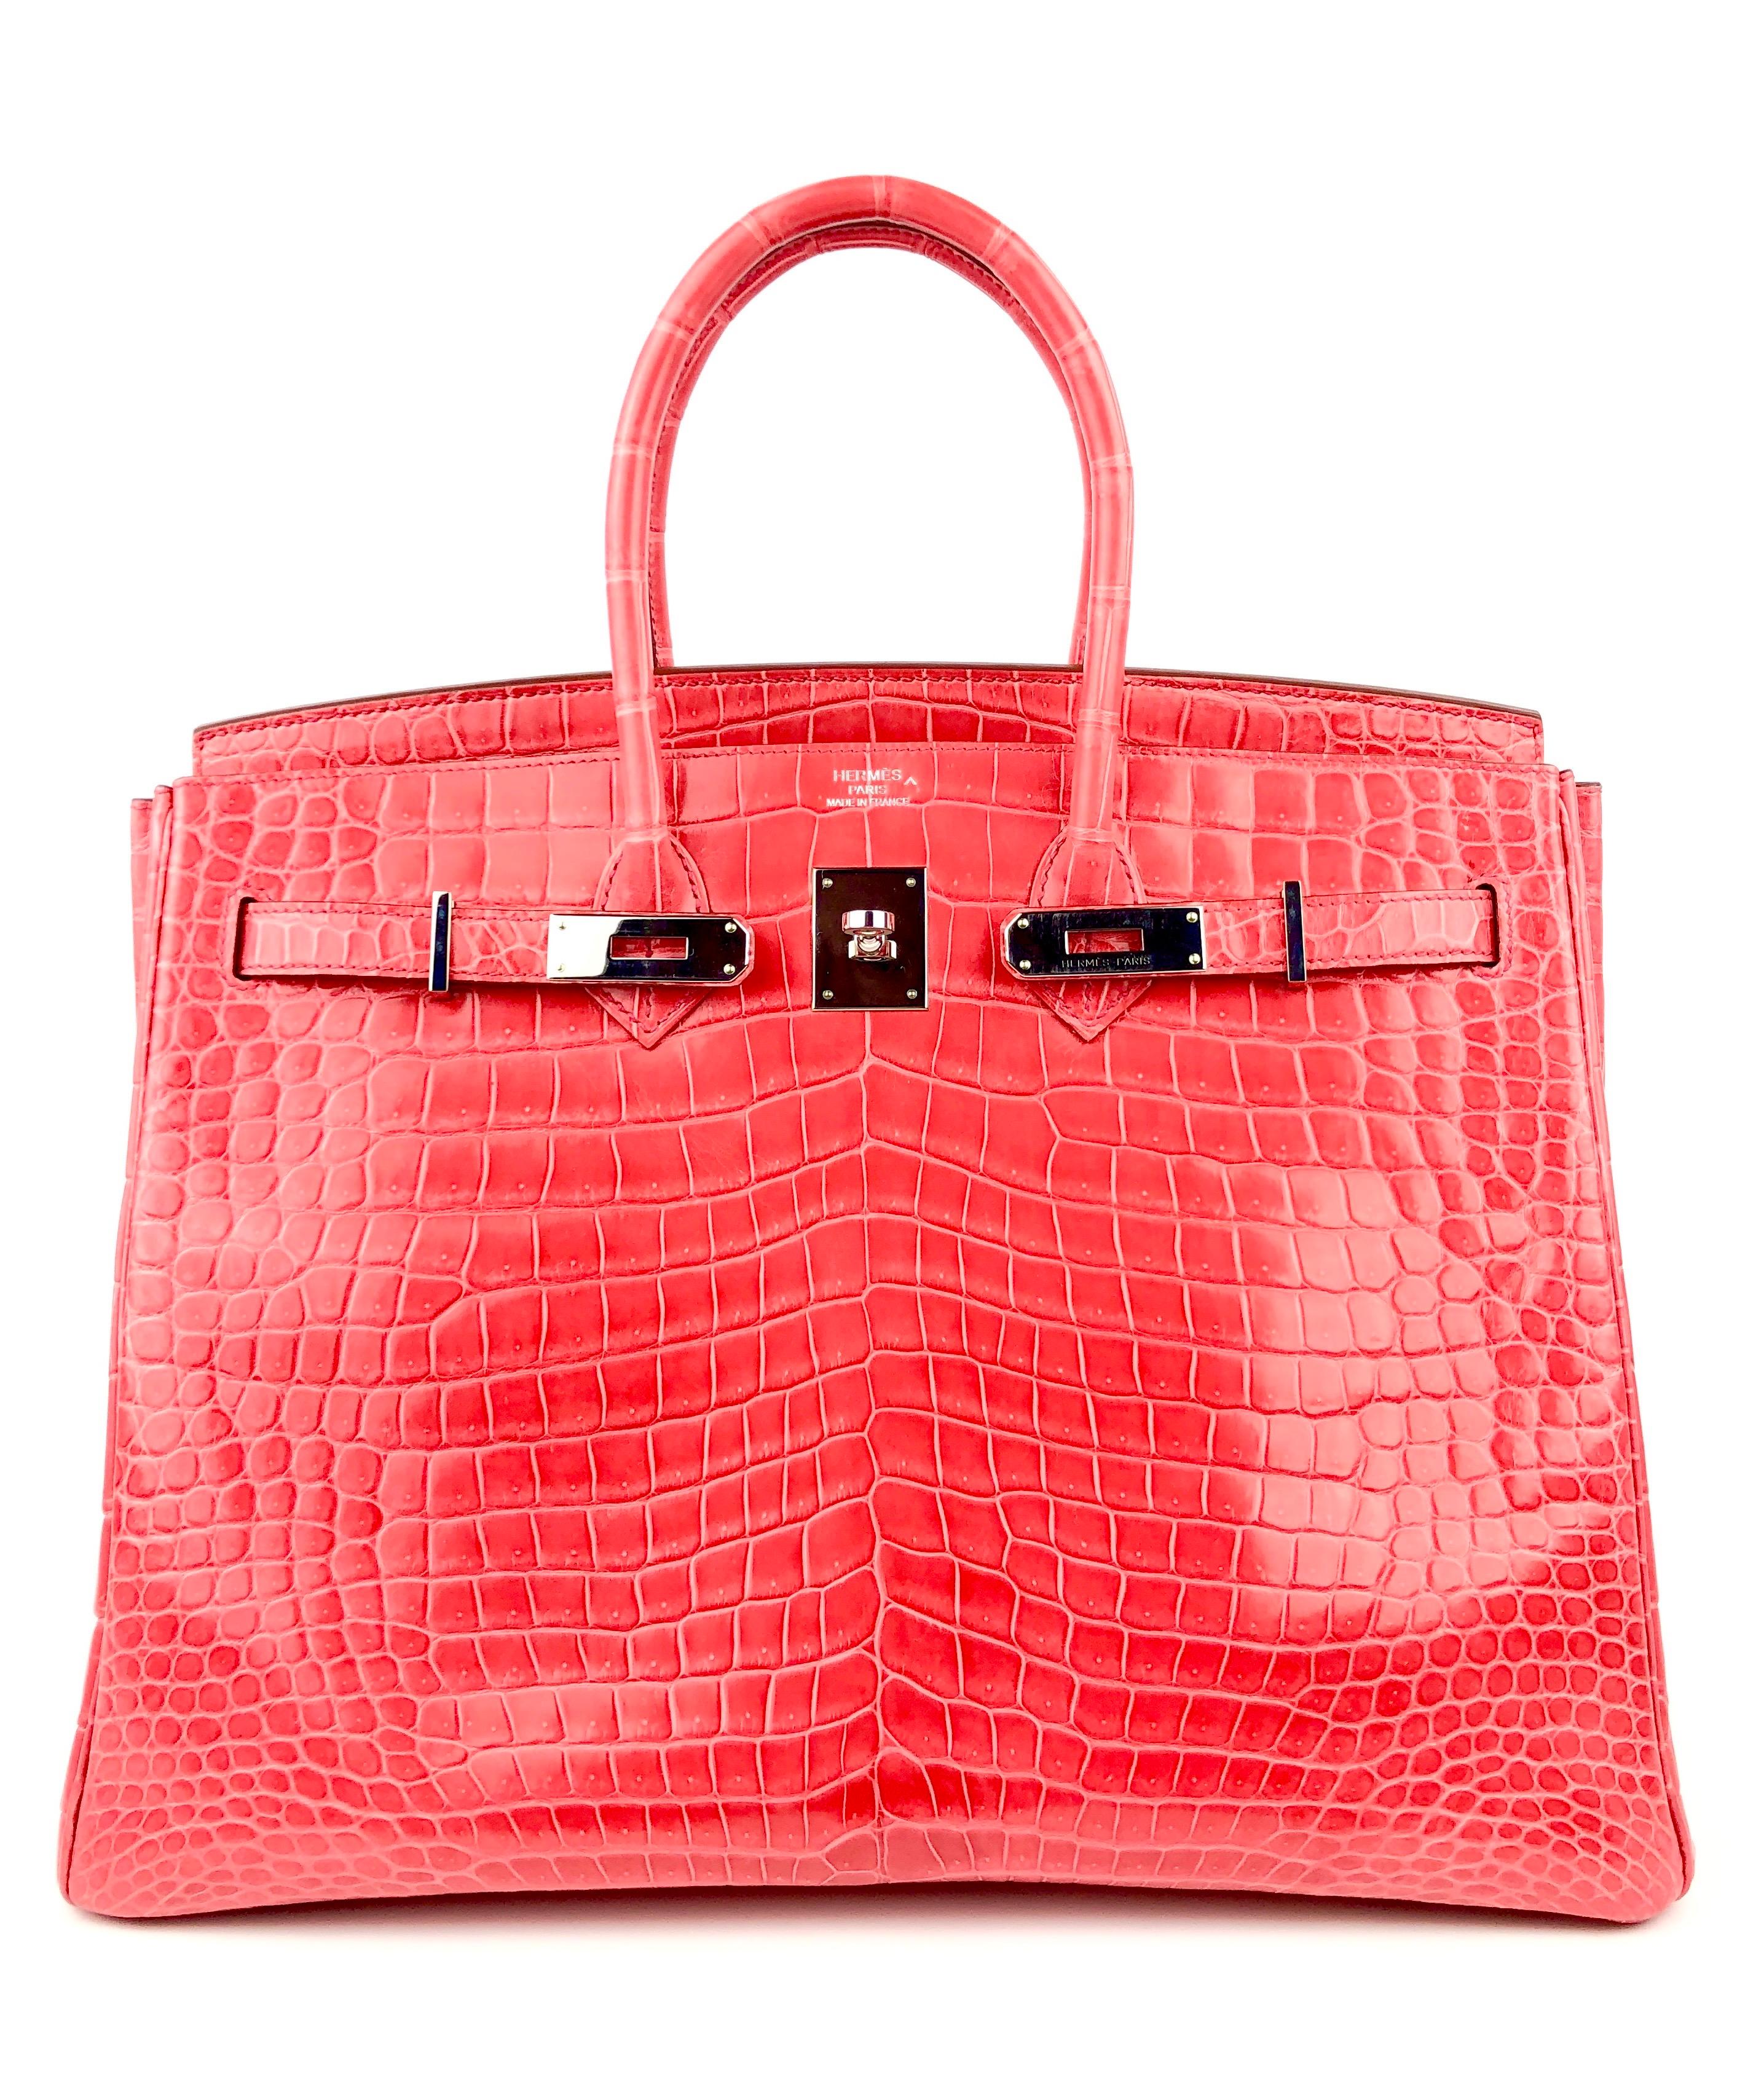 Rose Hermès - Sac Birkin 35 en crocodile bougainvillea rose vif et finitions métalliques en palladium, 2016